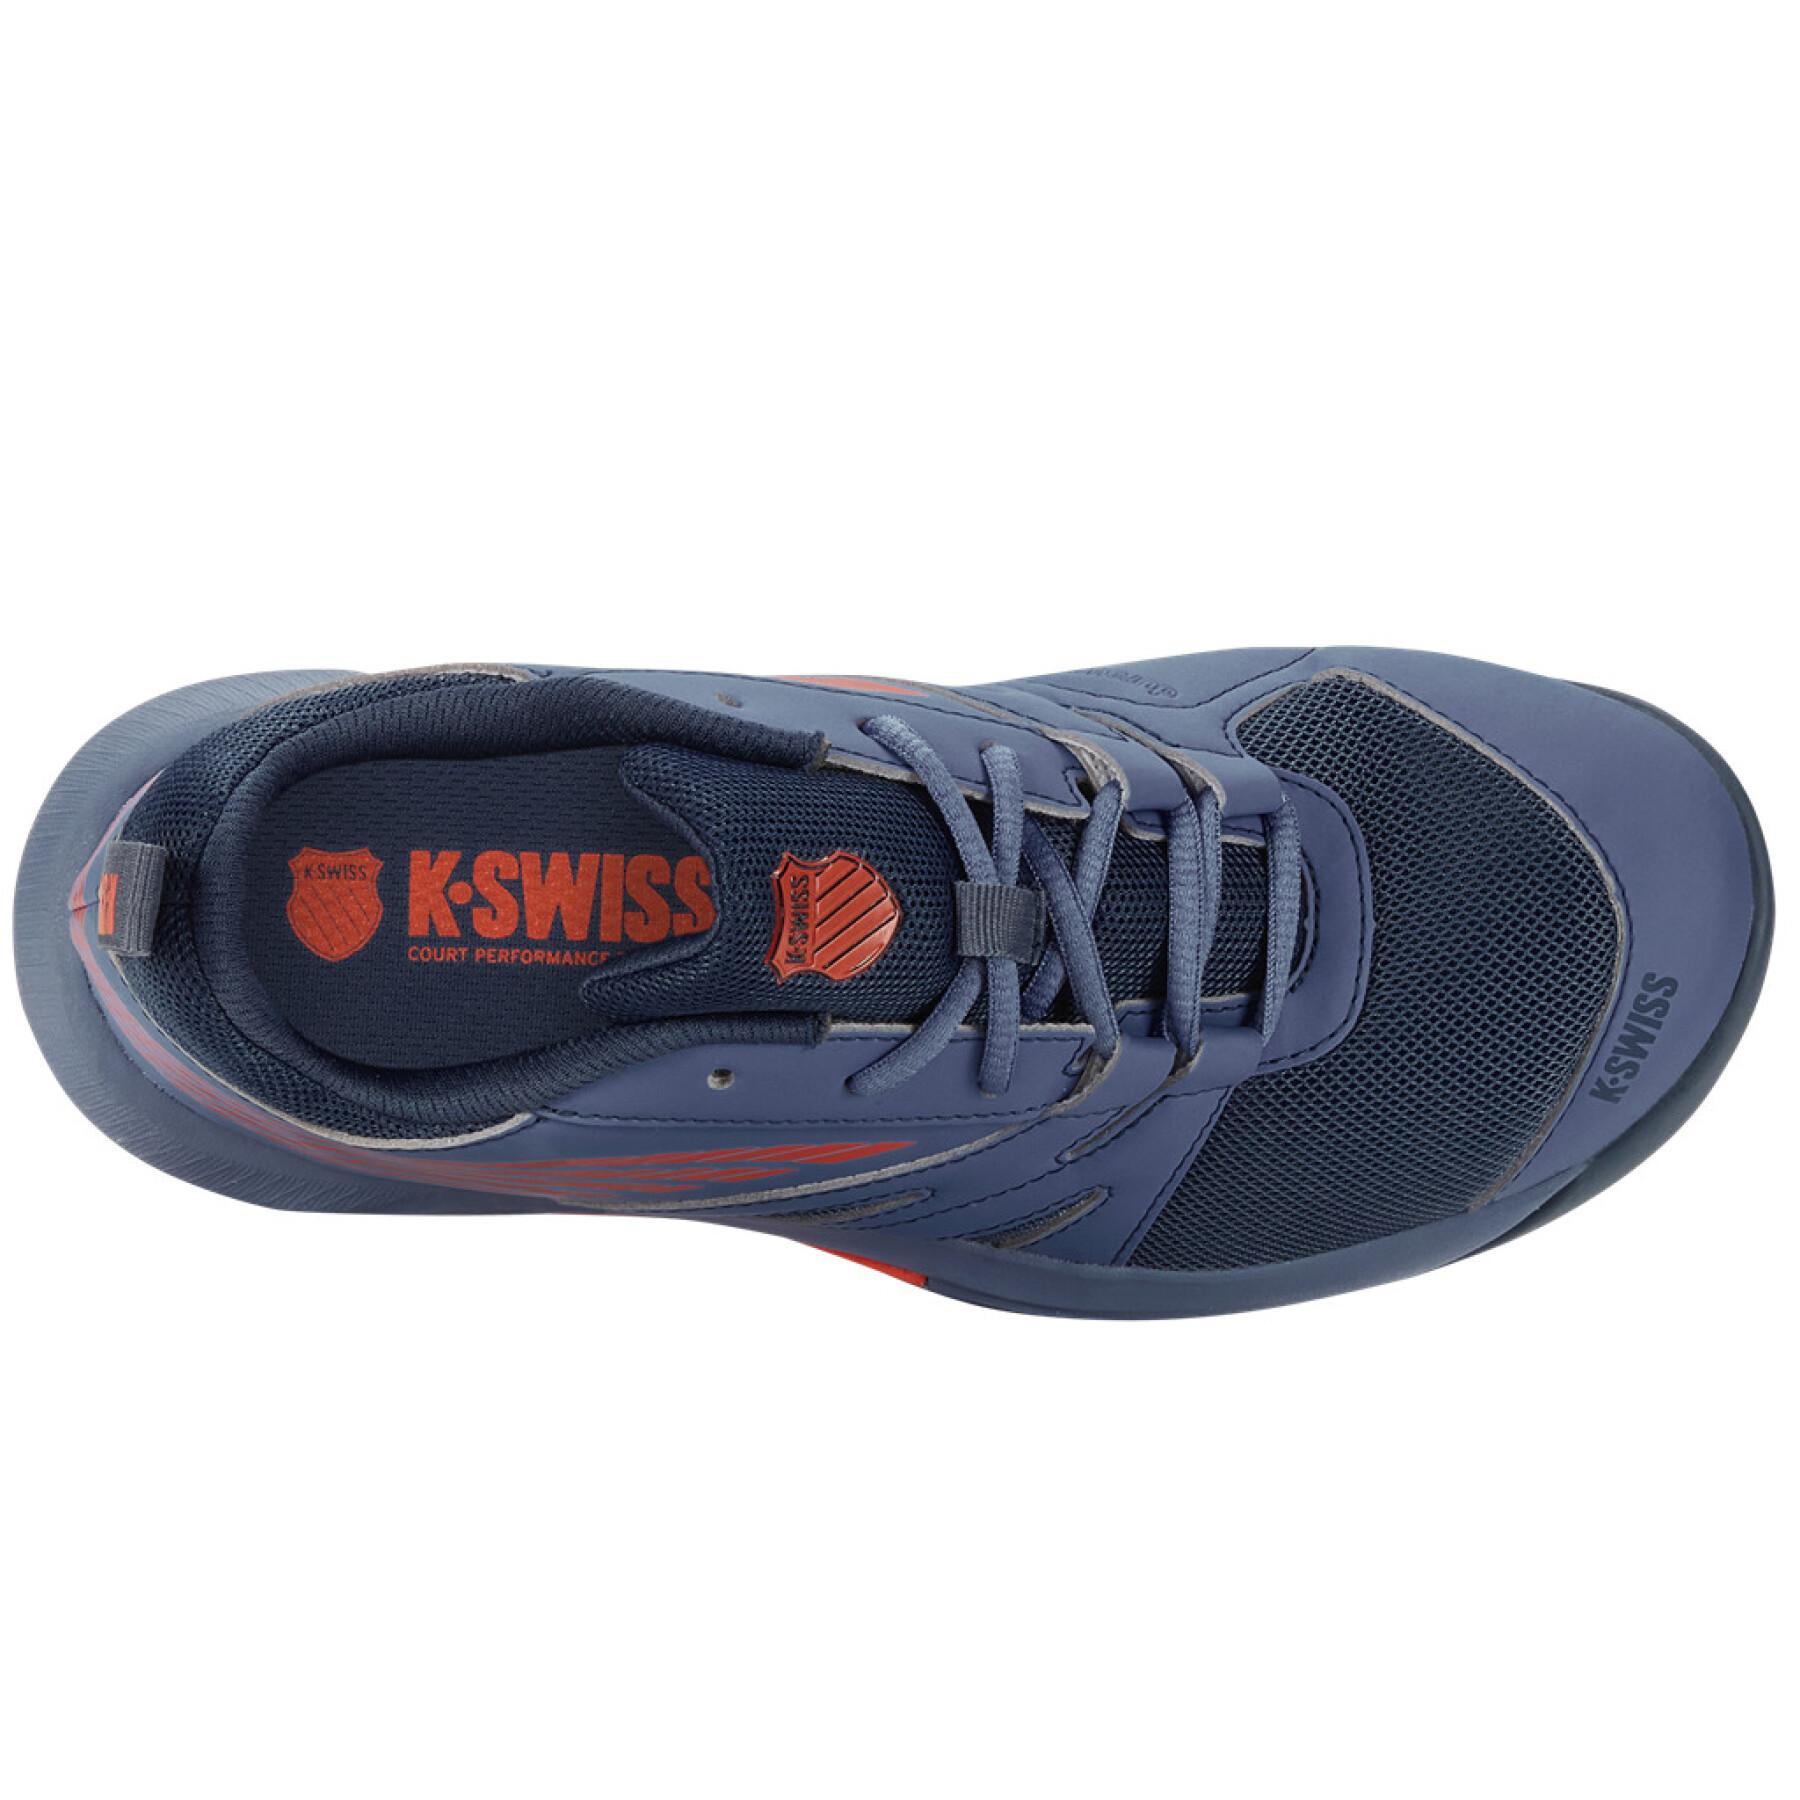 Children's tennis shoes K-Swiss Speedtrac